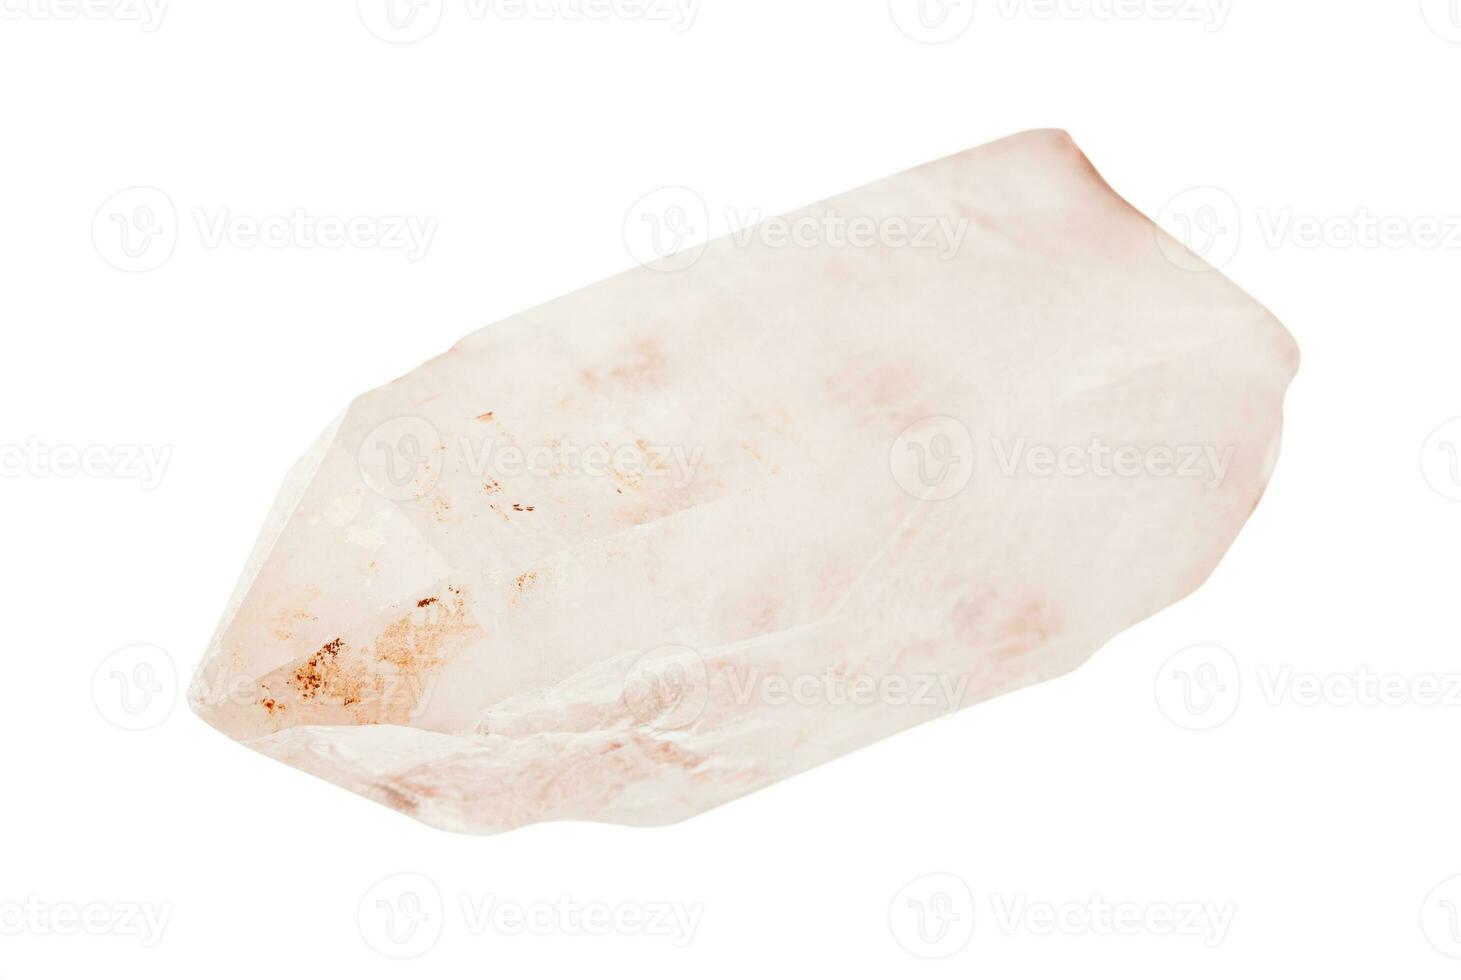 cru rosa quartzo cristal isolado em branco foto